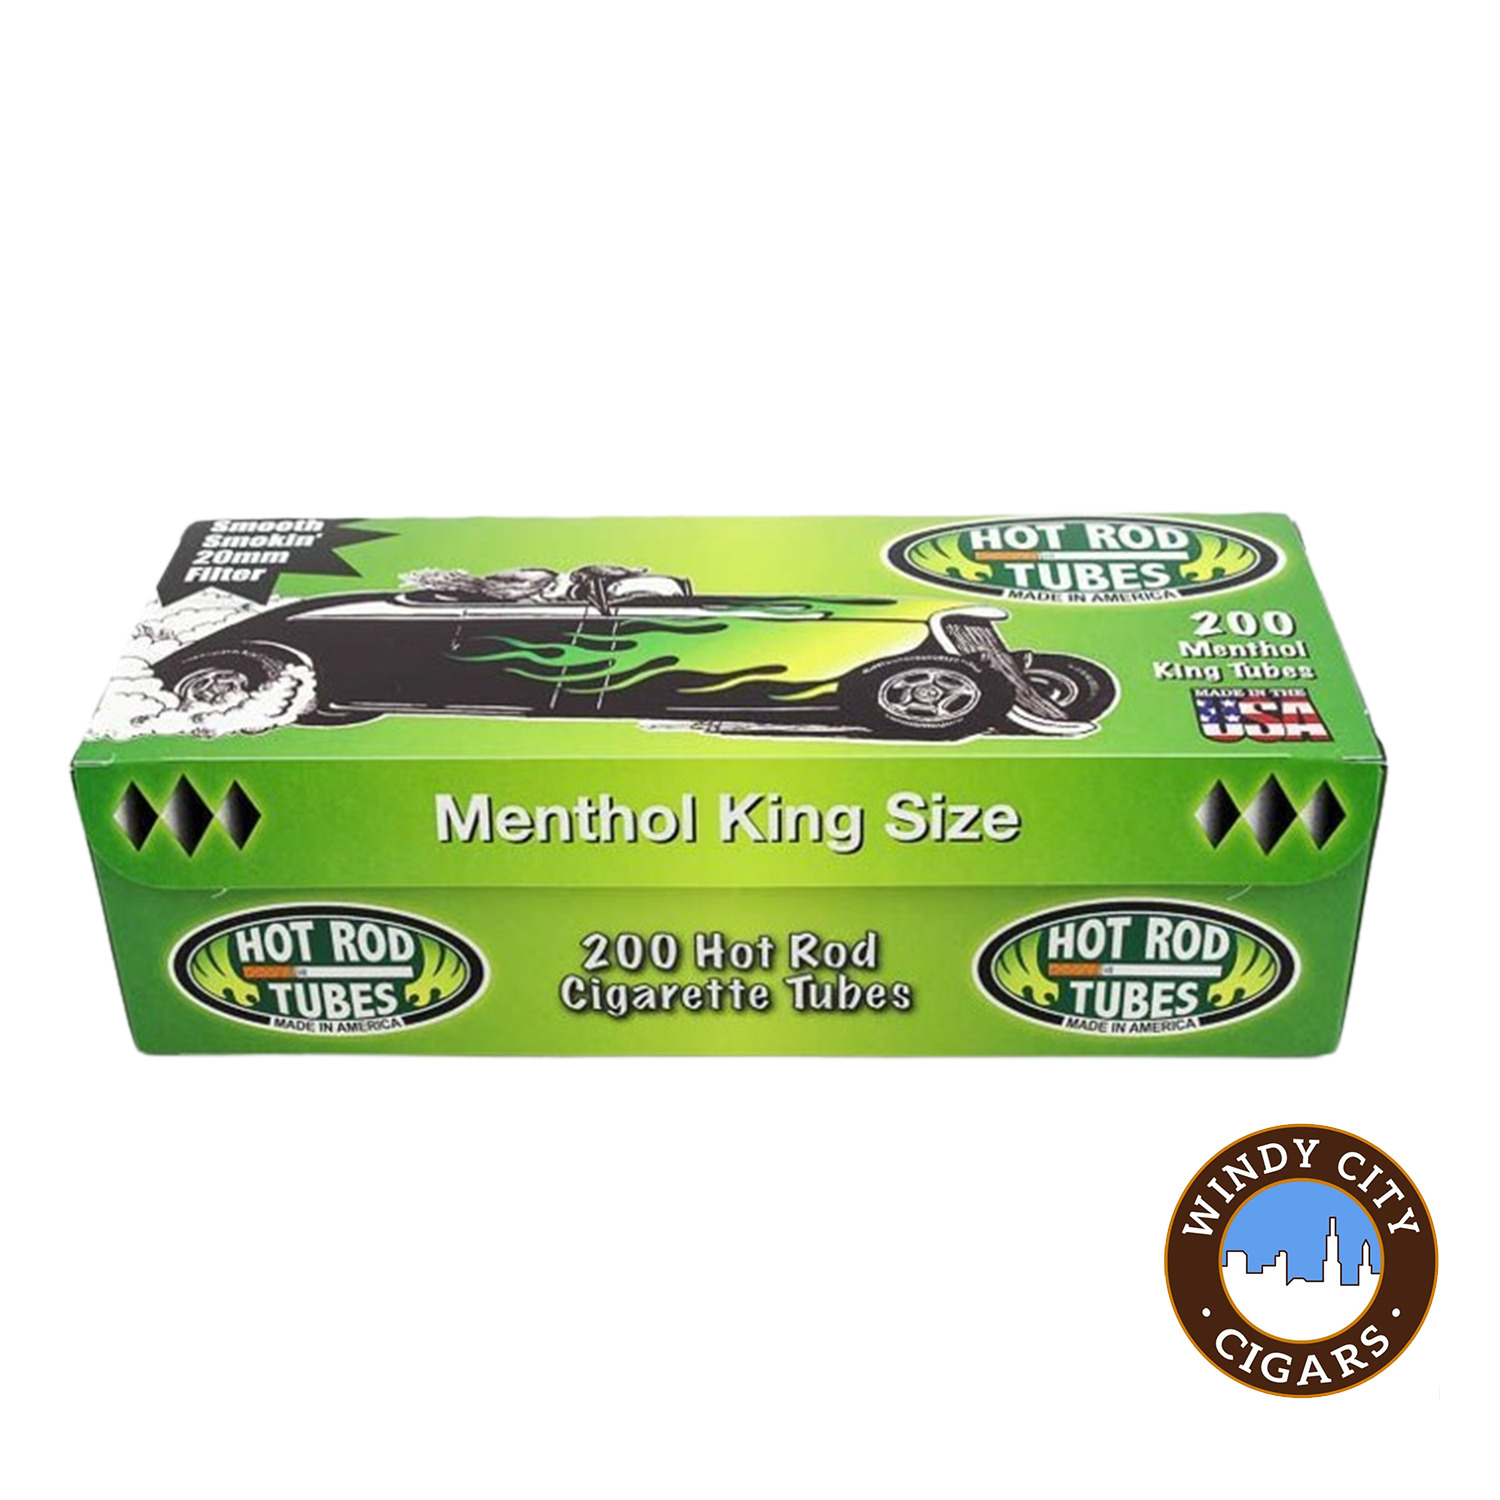 Hot Rod Menthol King Cigarette 200ct Tubes - 5 Boxes